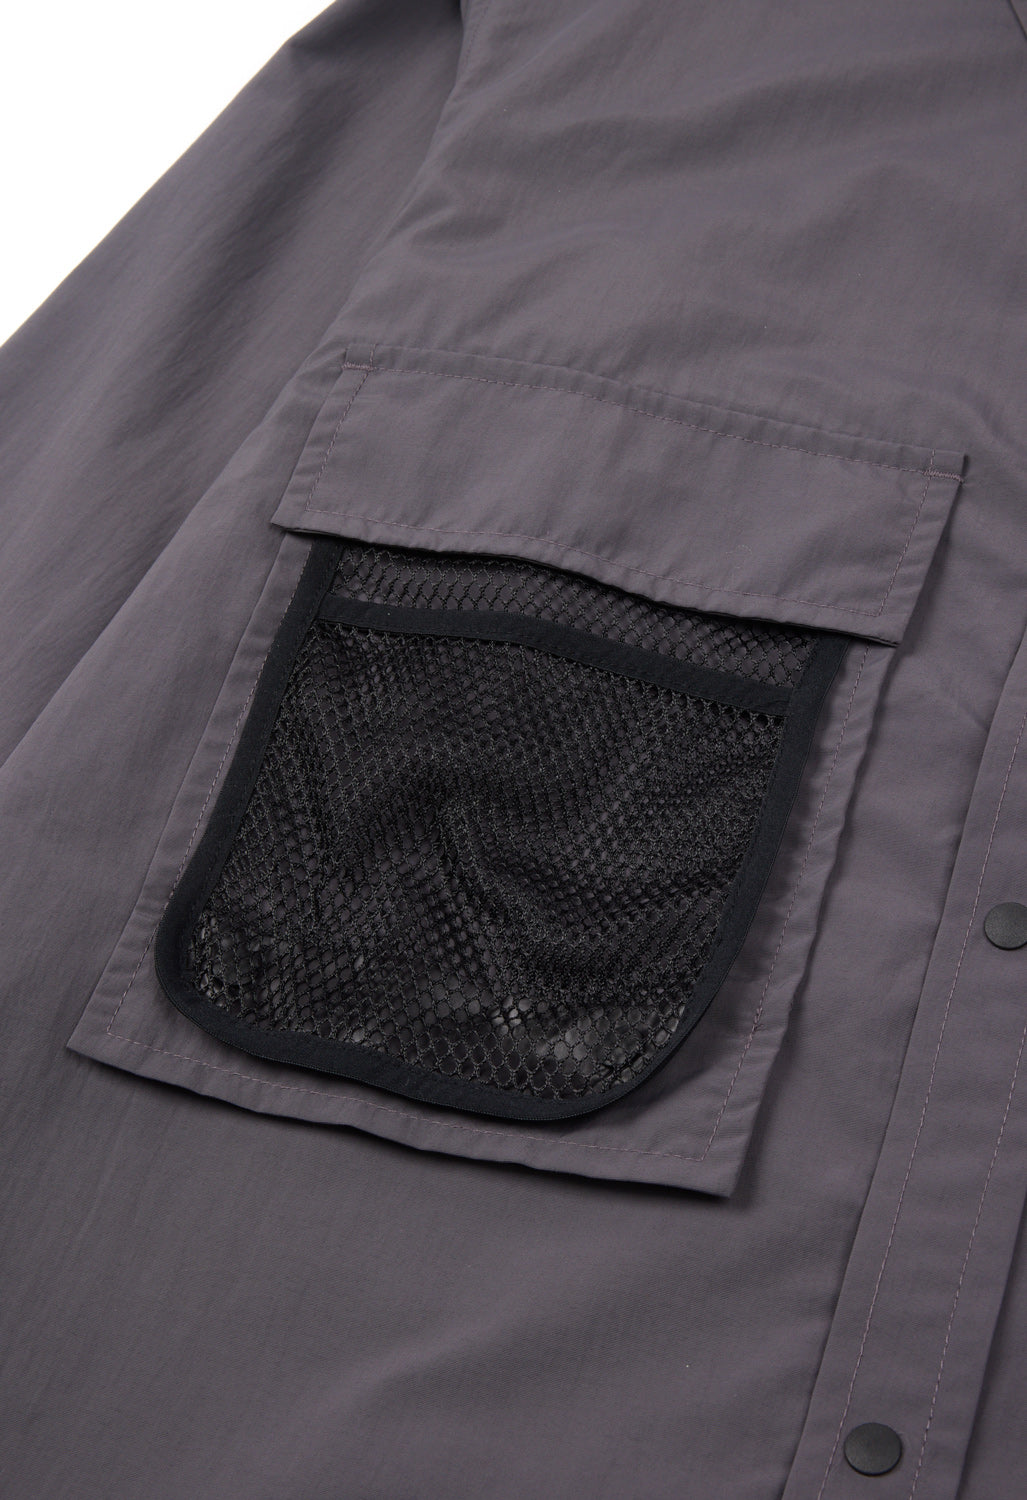 Goldwin Men's Field Venti Nylon Shirt - Deep Charcoal